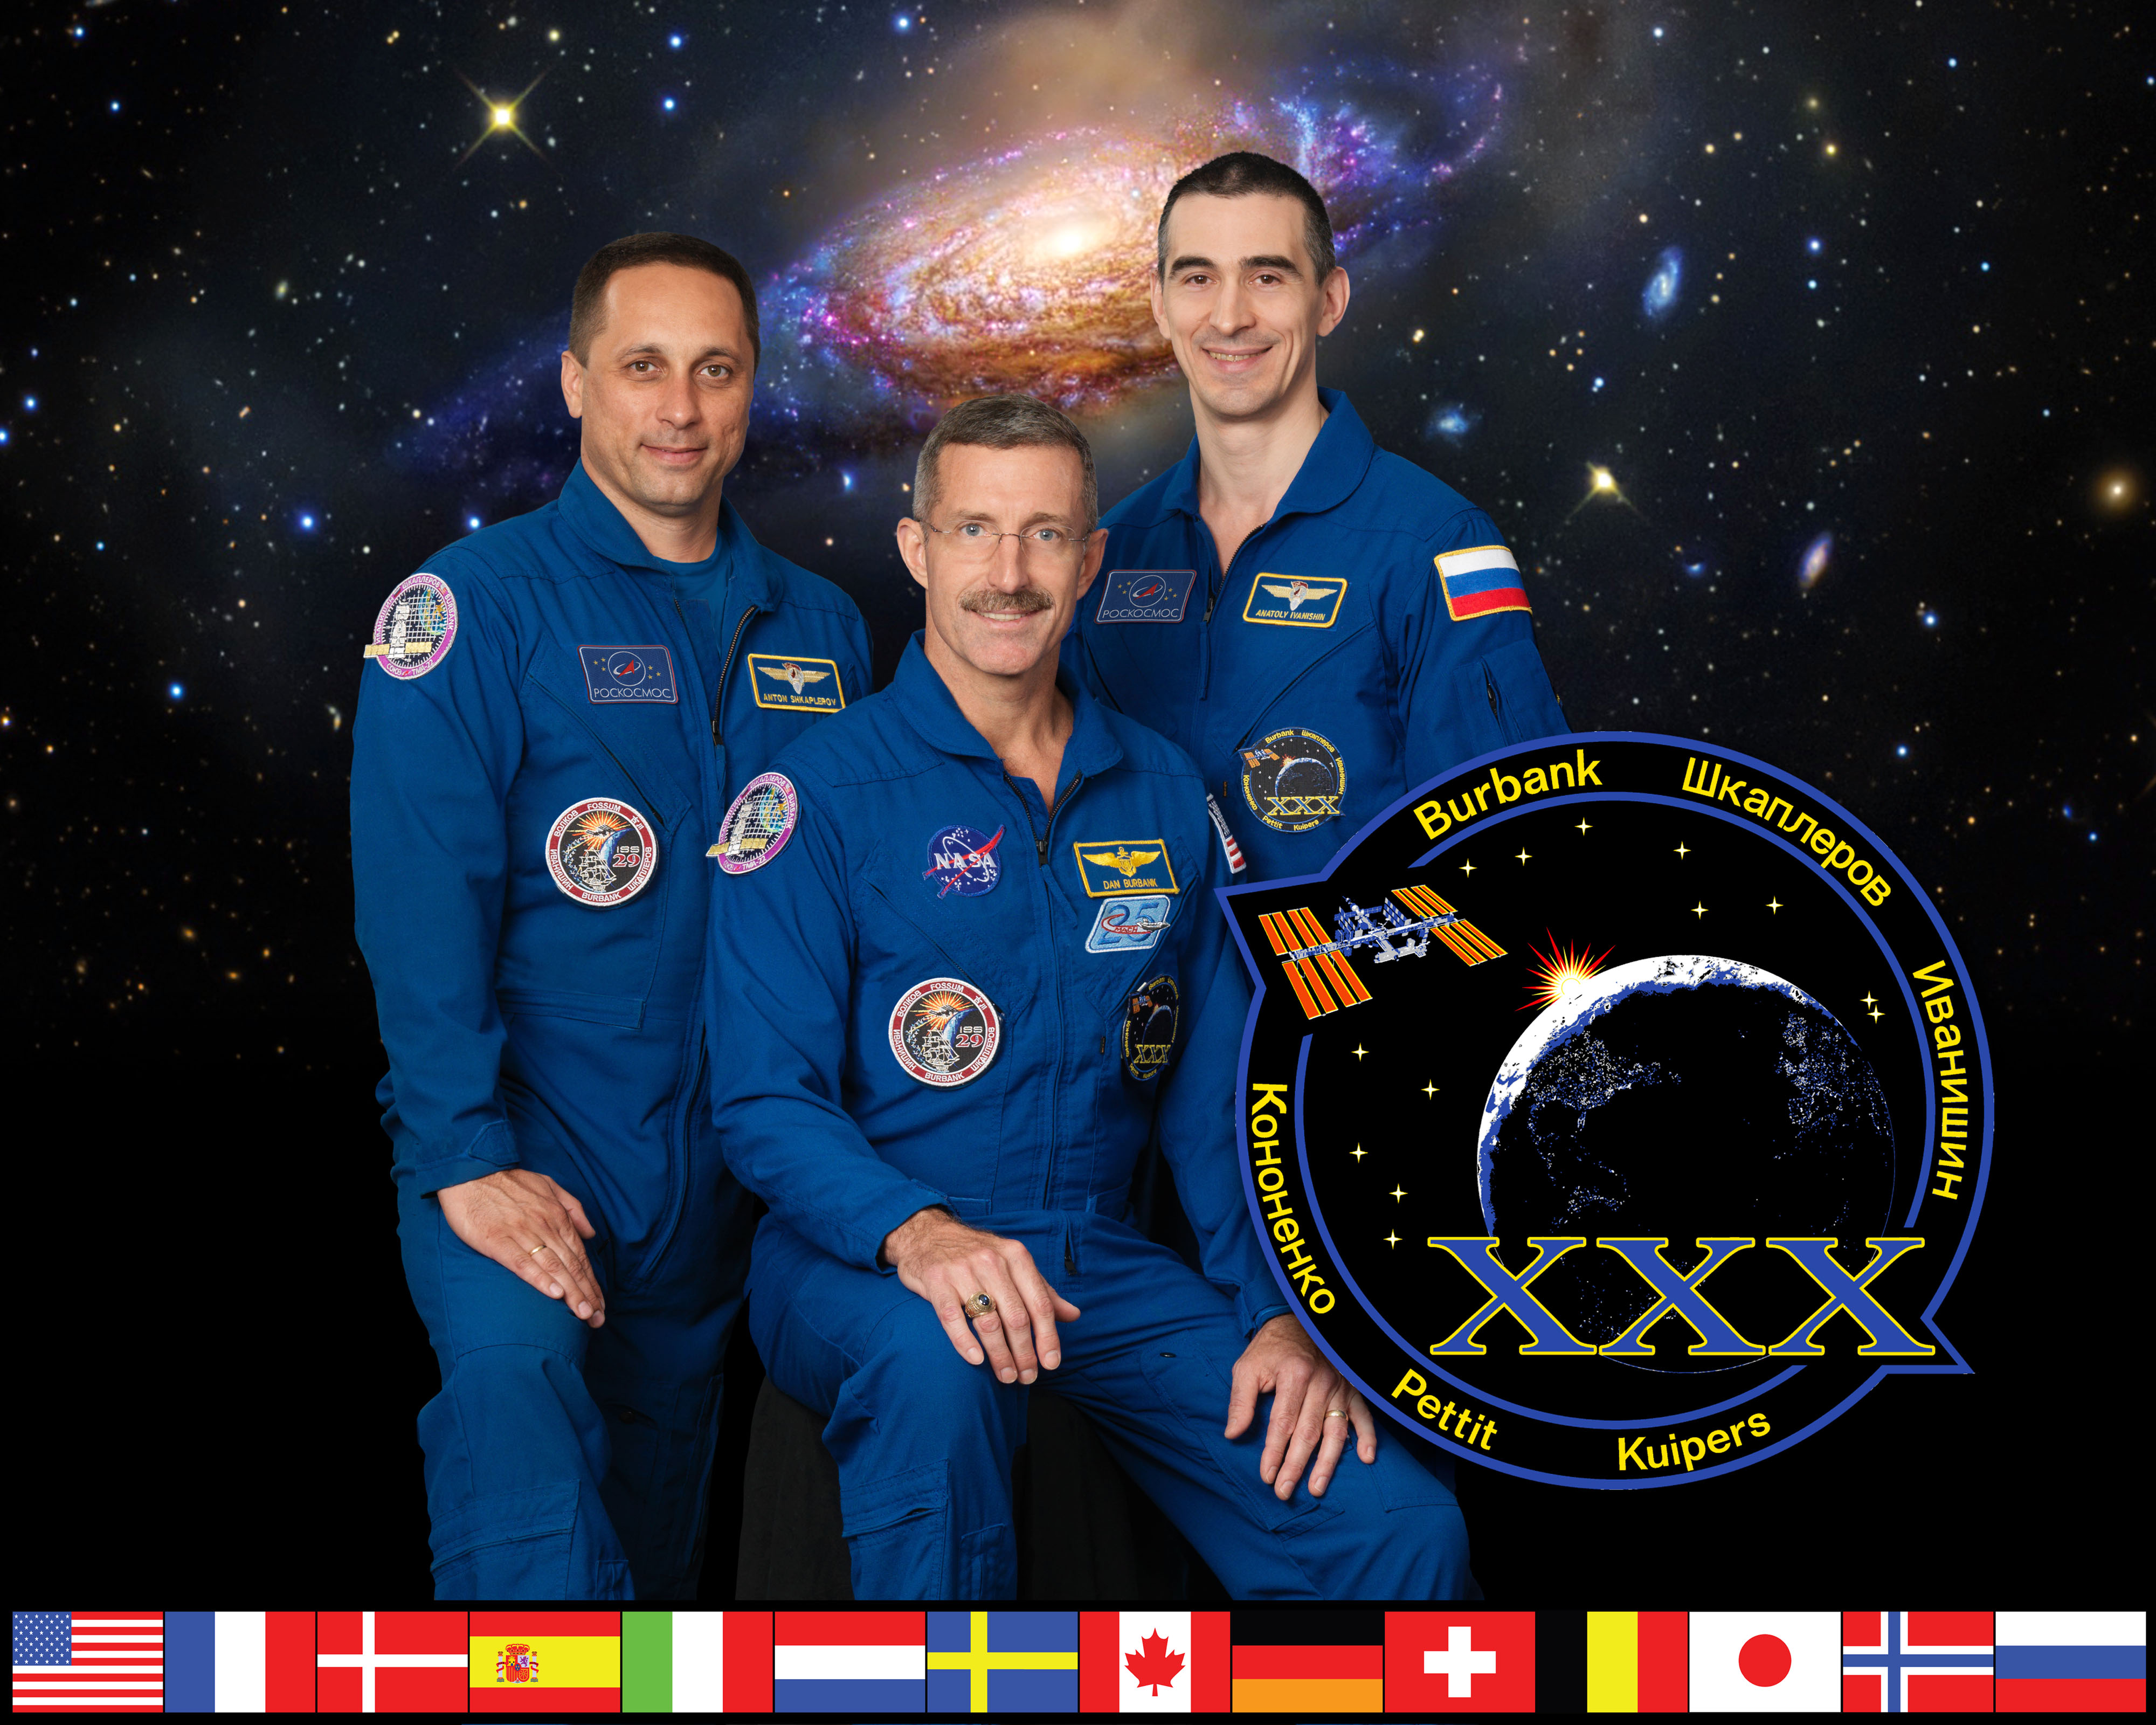 Expedition 30 crew portrait v2